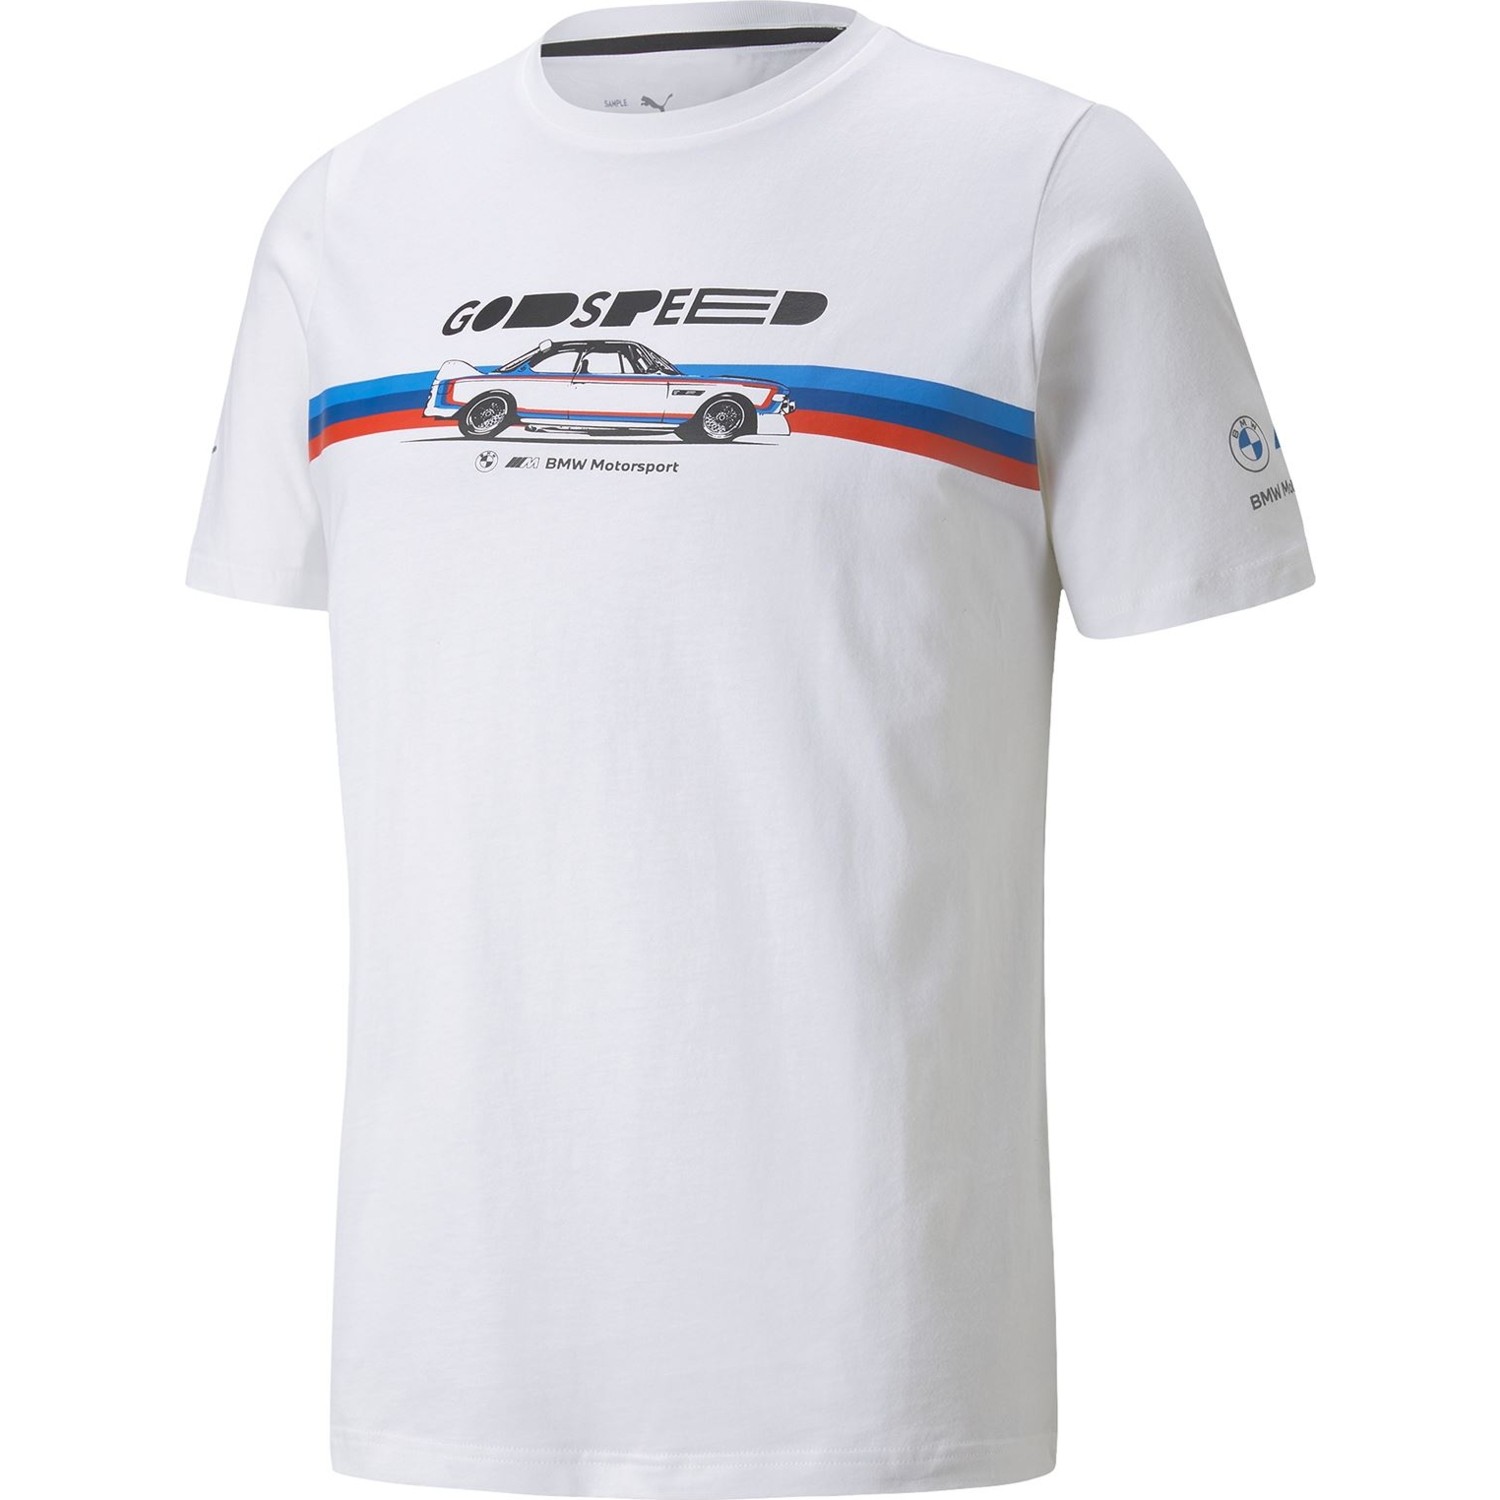 Puma BMW T-shirt, M men white CAR GRAPHIC Motorsport